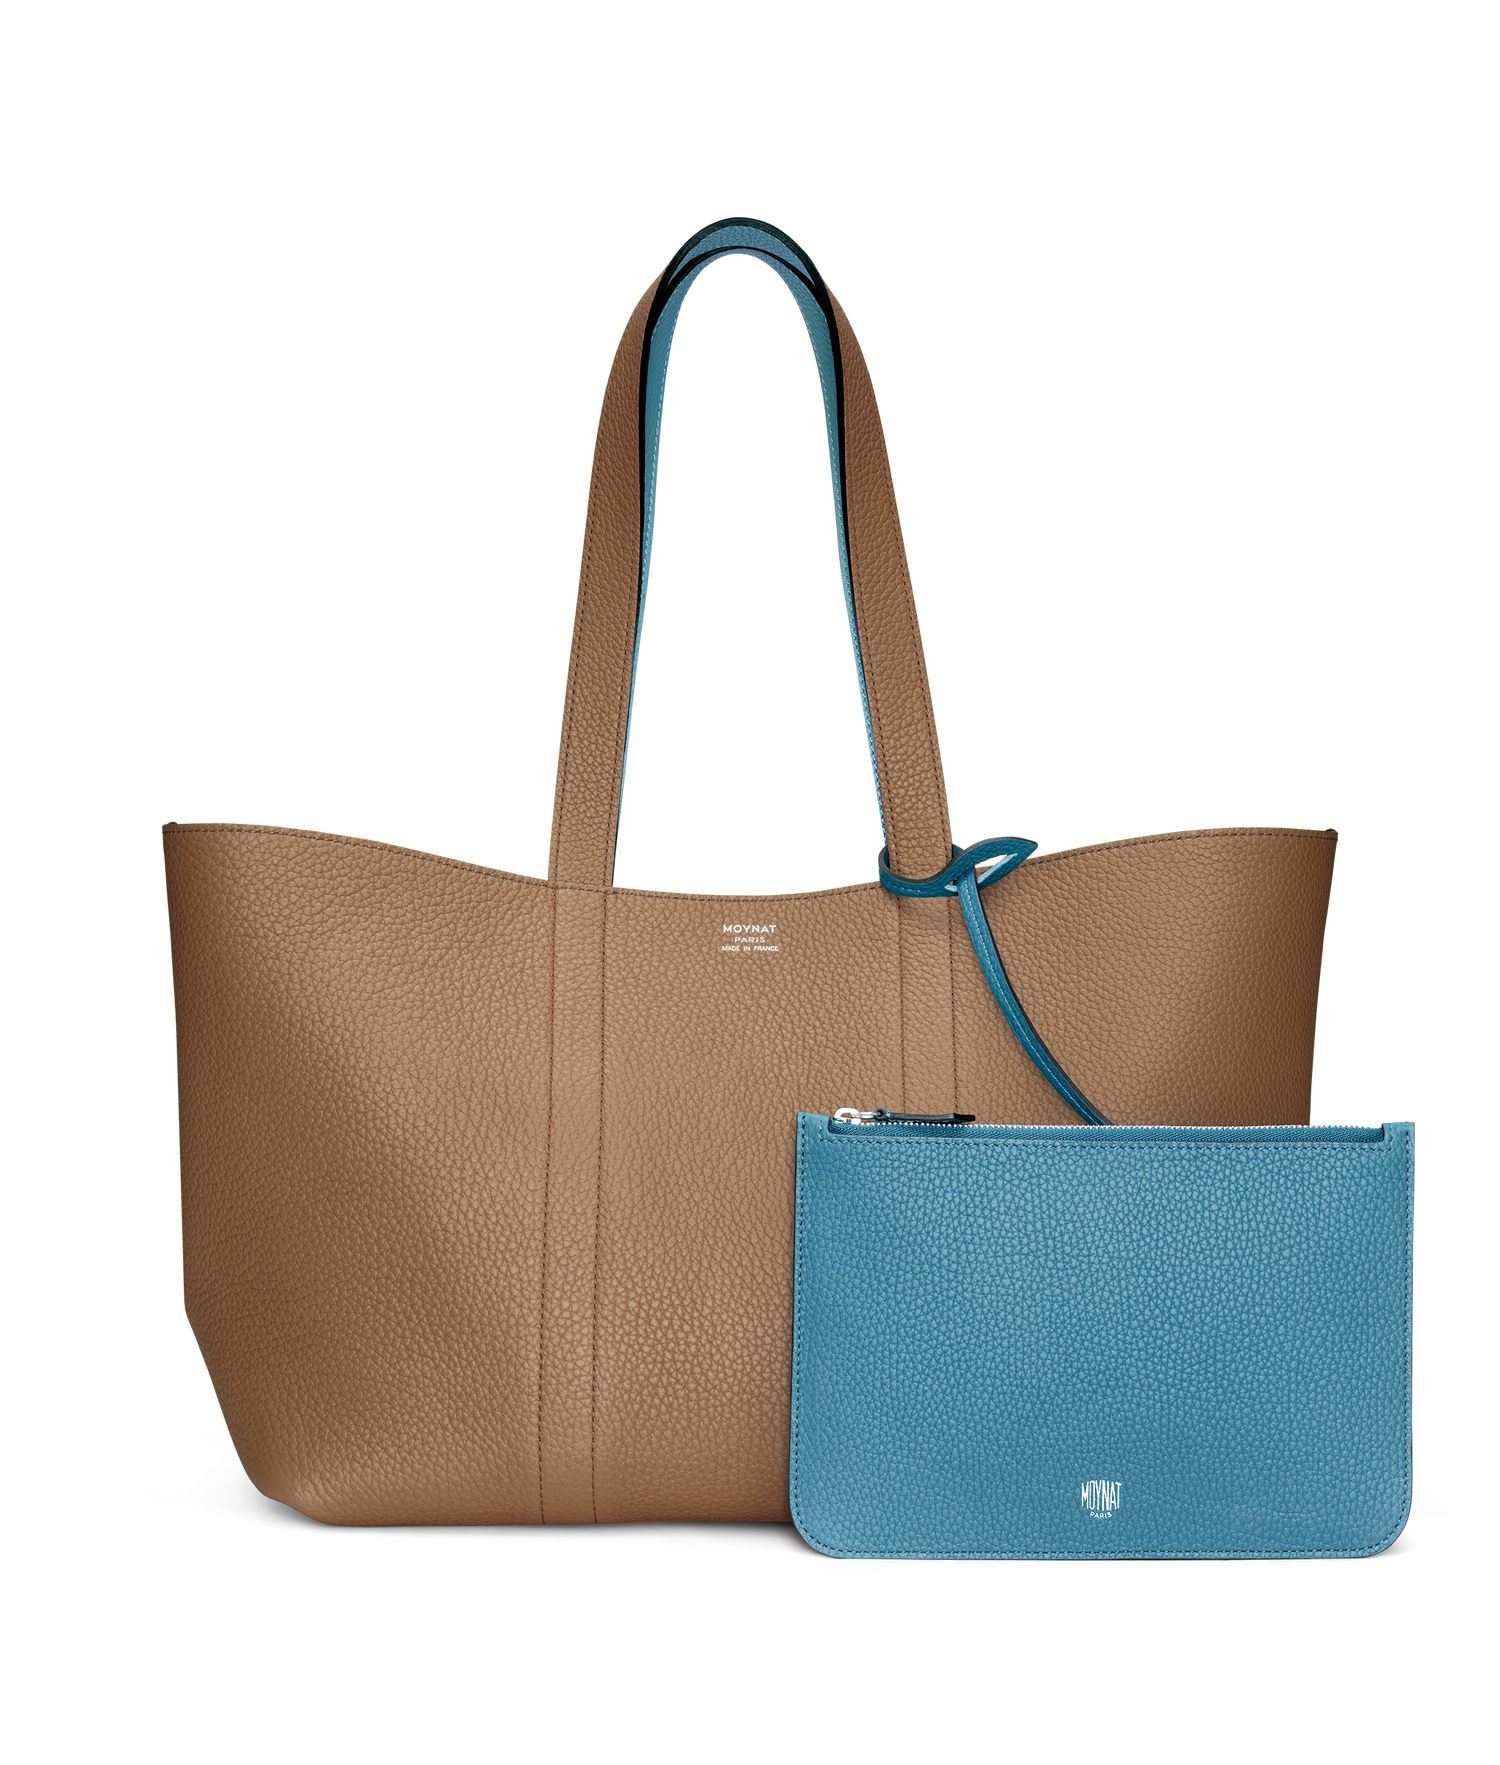 Moynat Paris - Duo Tote Bag Horizontal Handbag - Blue or Grey - in Leather - Luxury